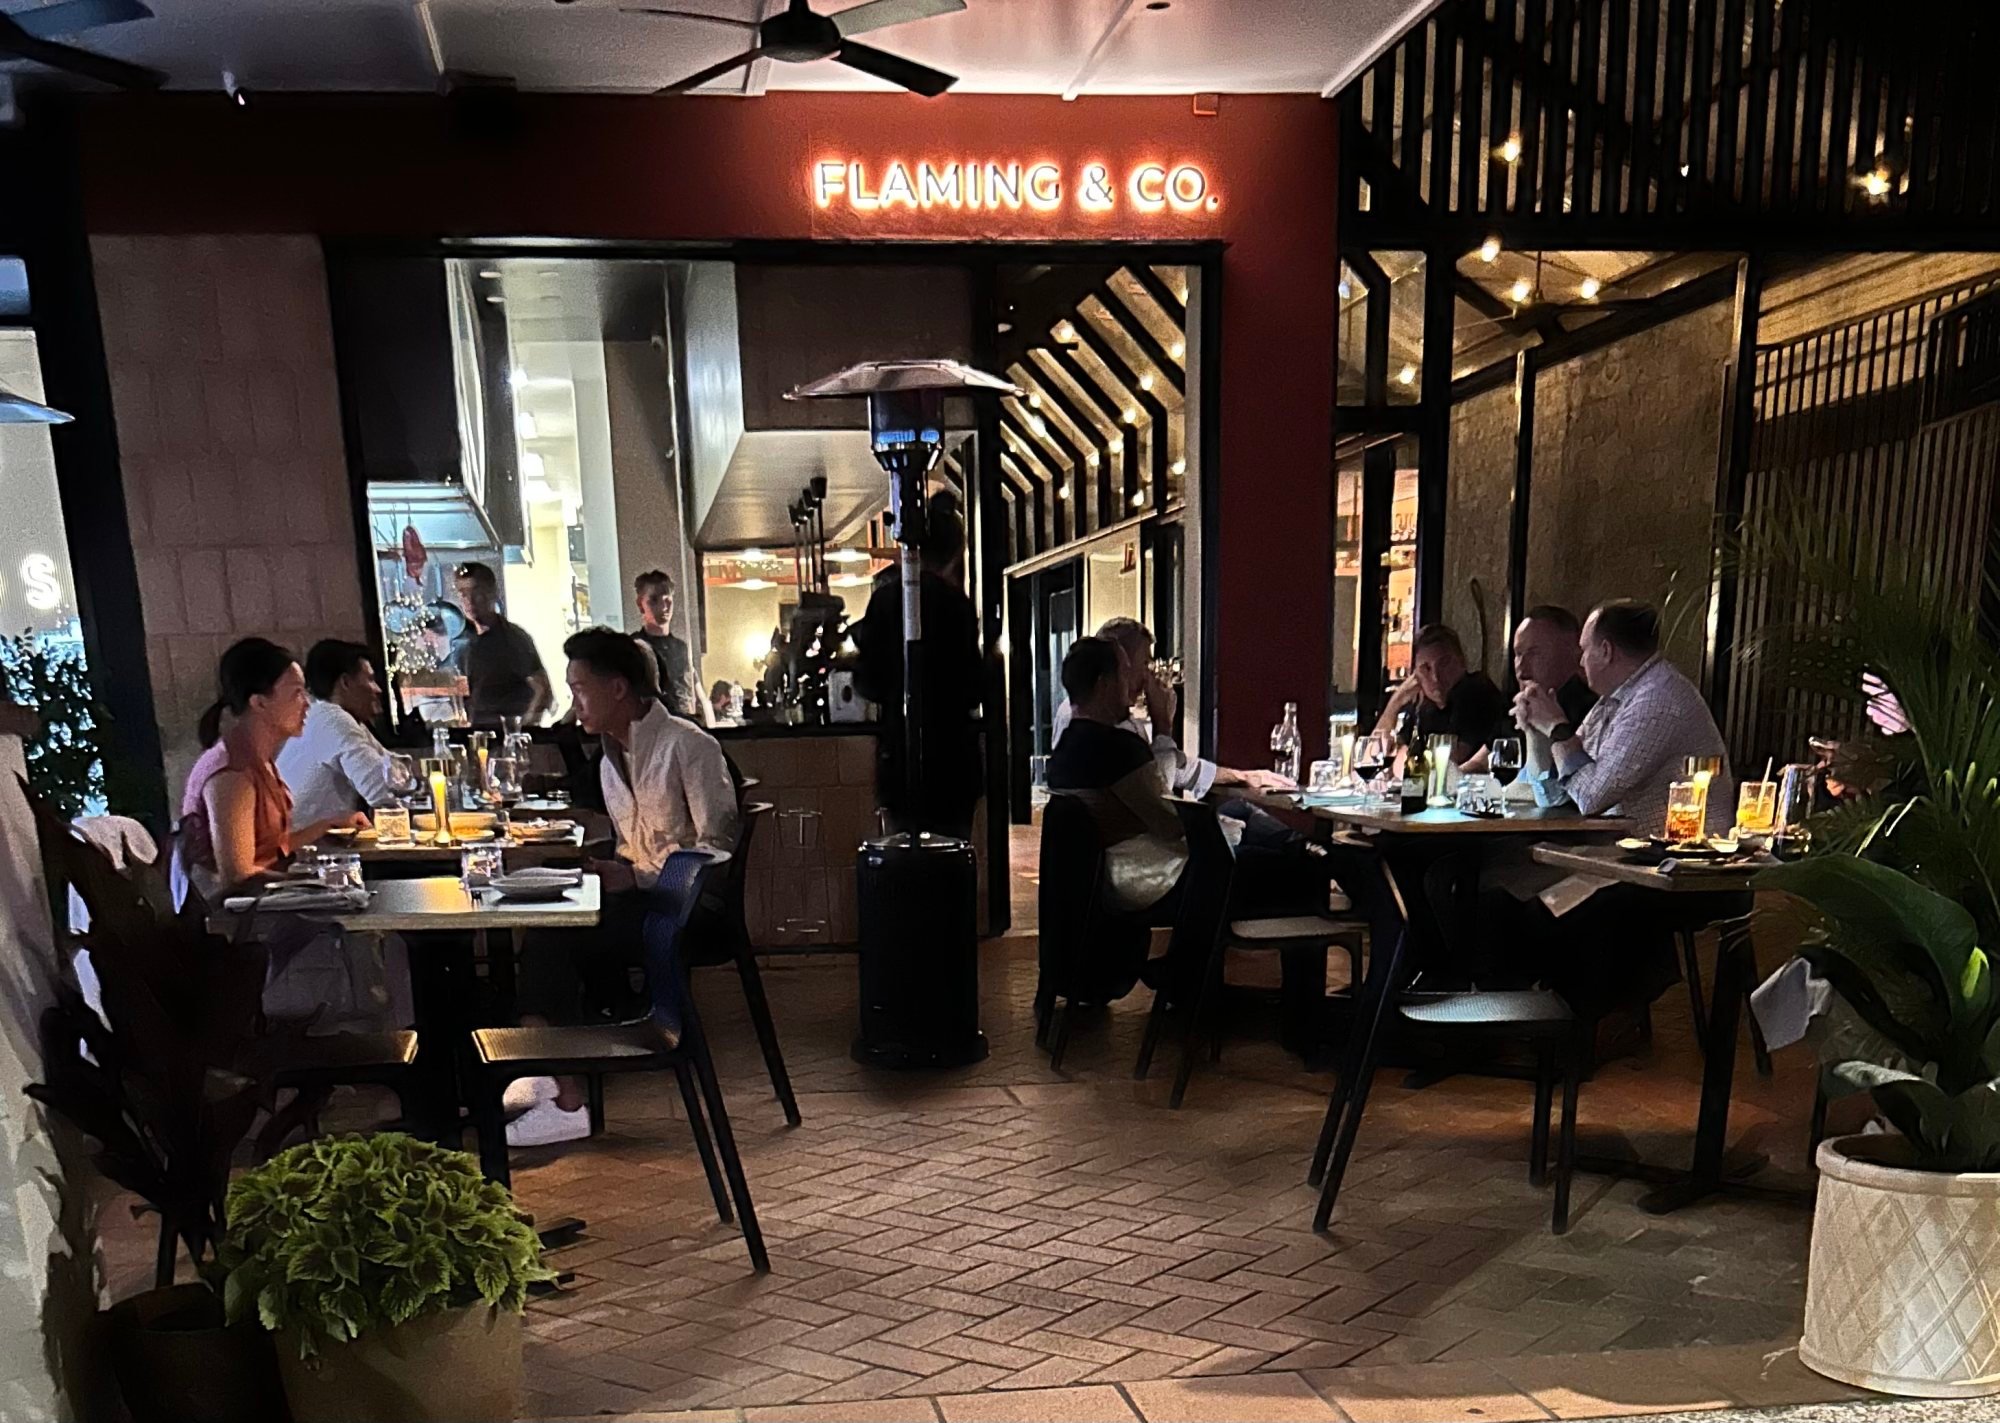 Flaming & Co., an upmarket grill restaurant in Brisbane, still has customers. Photo: Handout